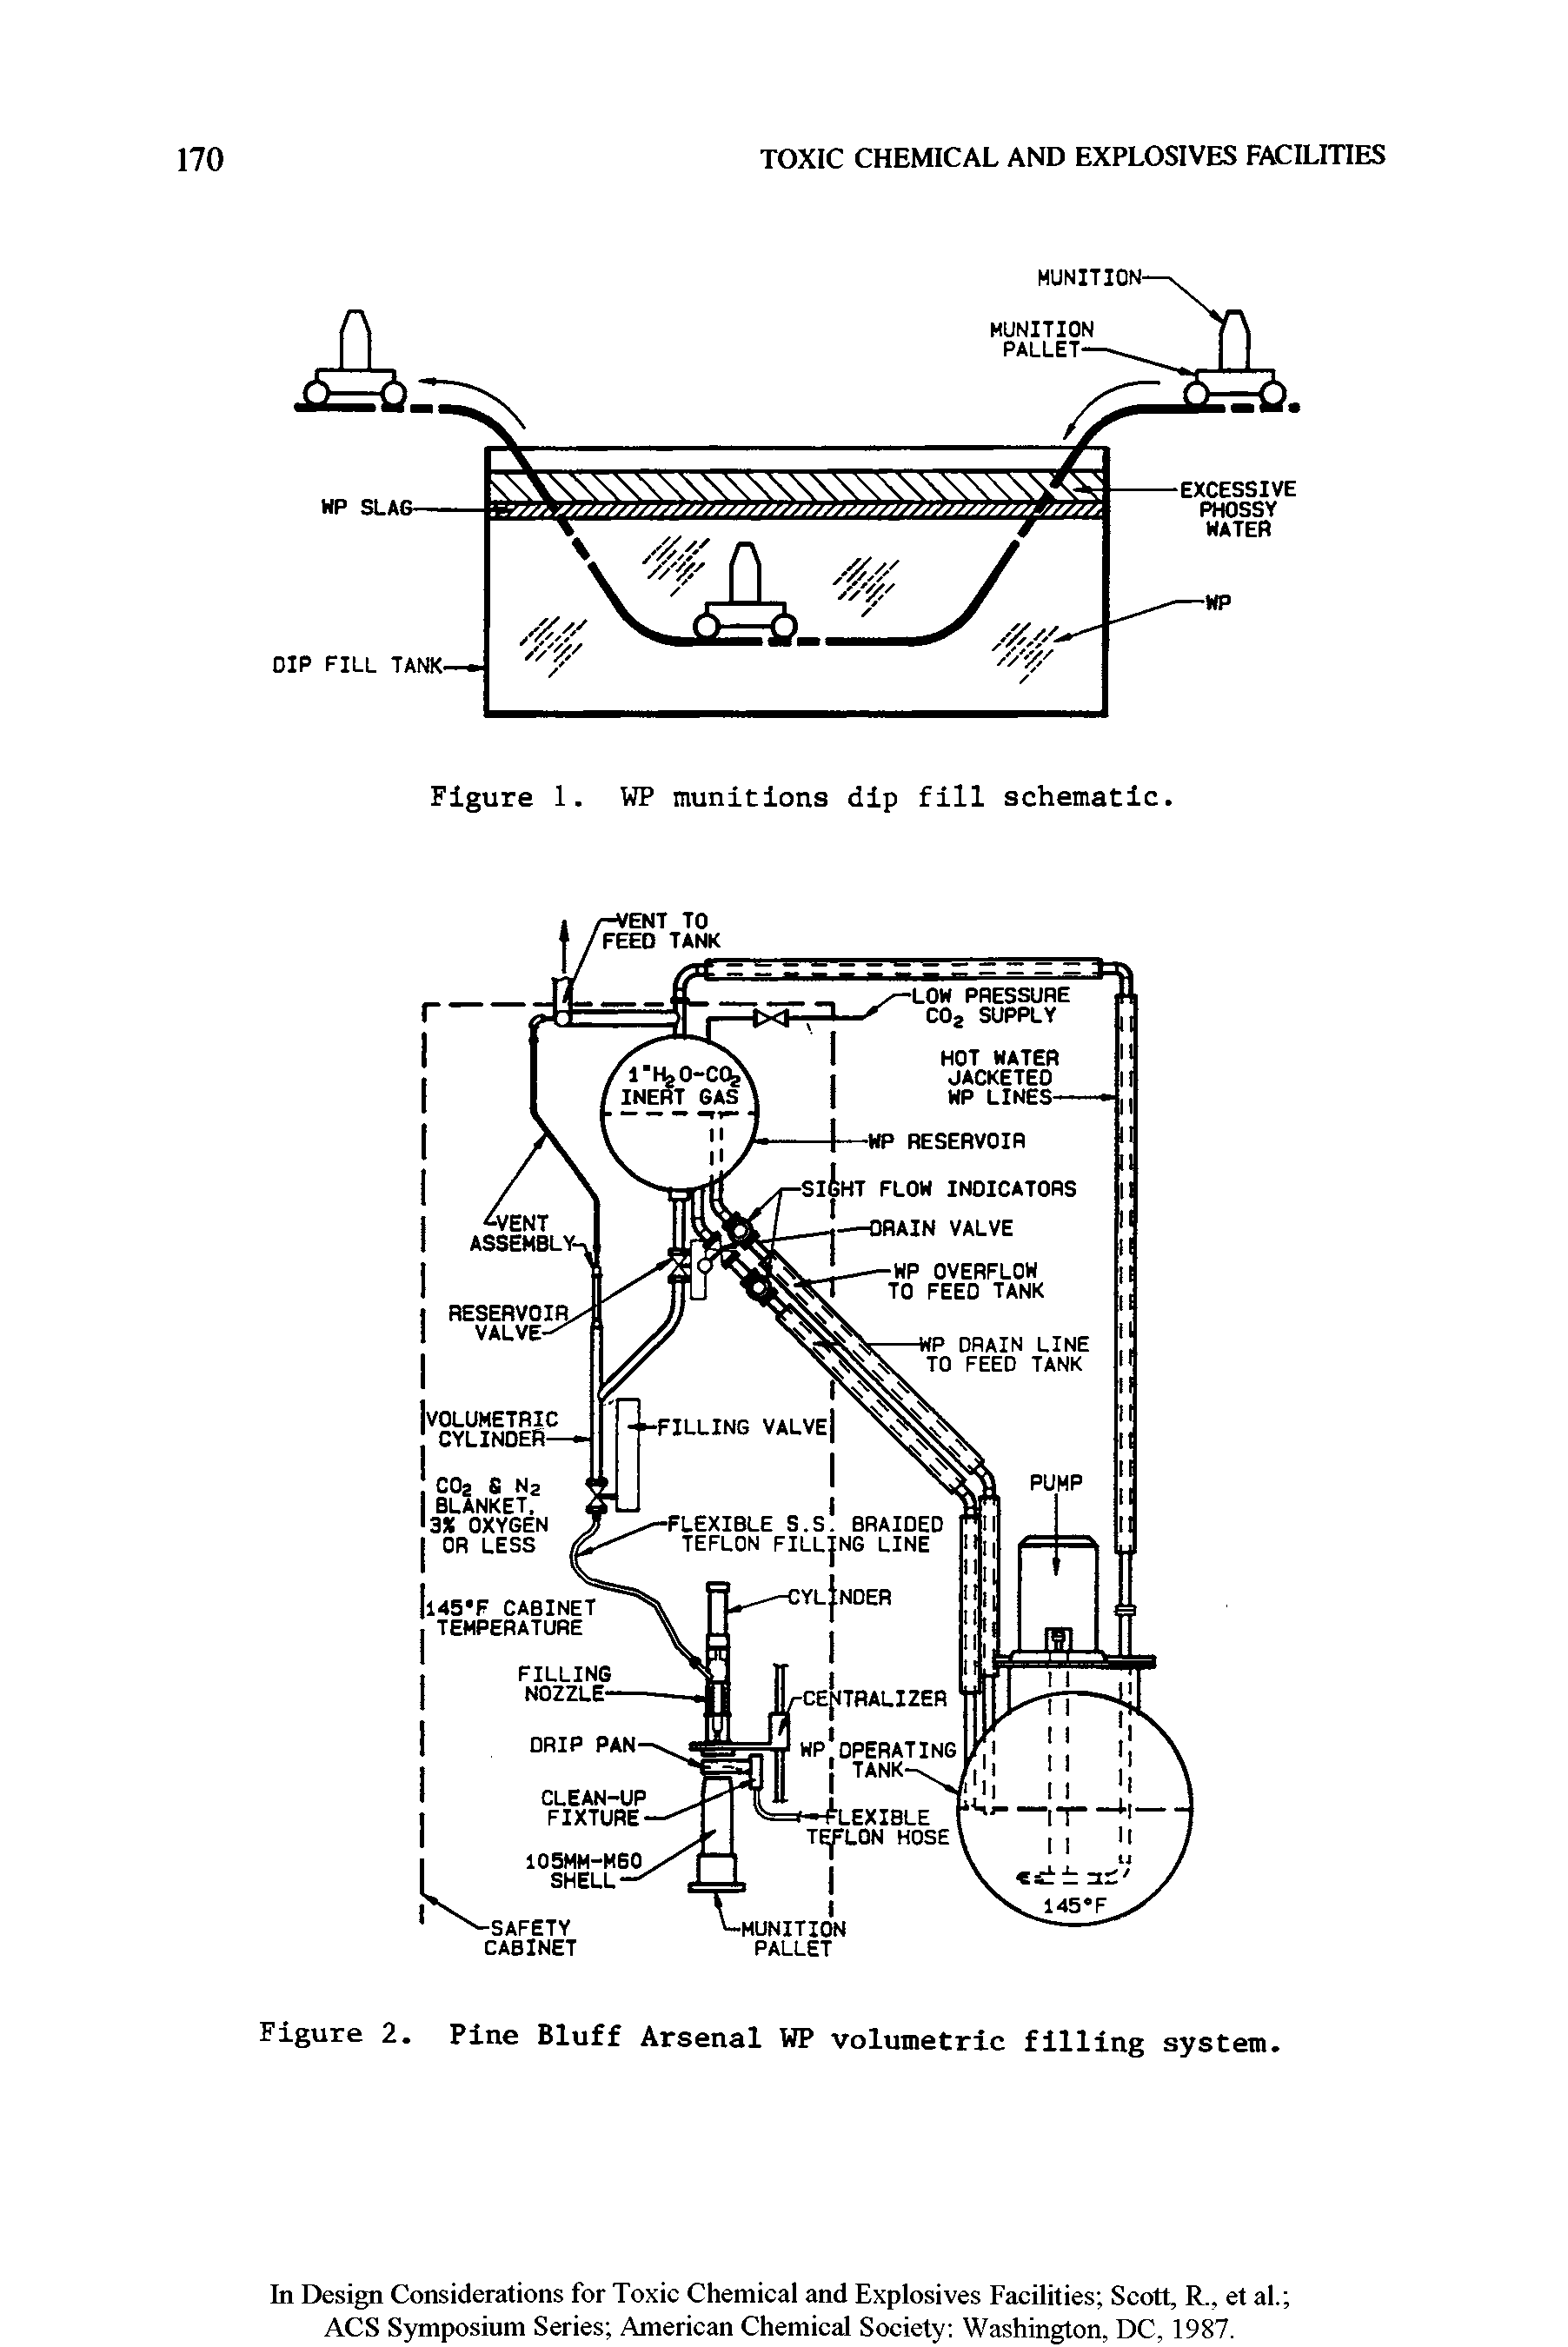 Figure 2. Pine Bluff Arsenal WP volumetric filling system.